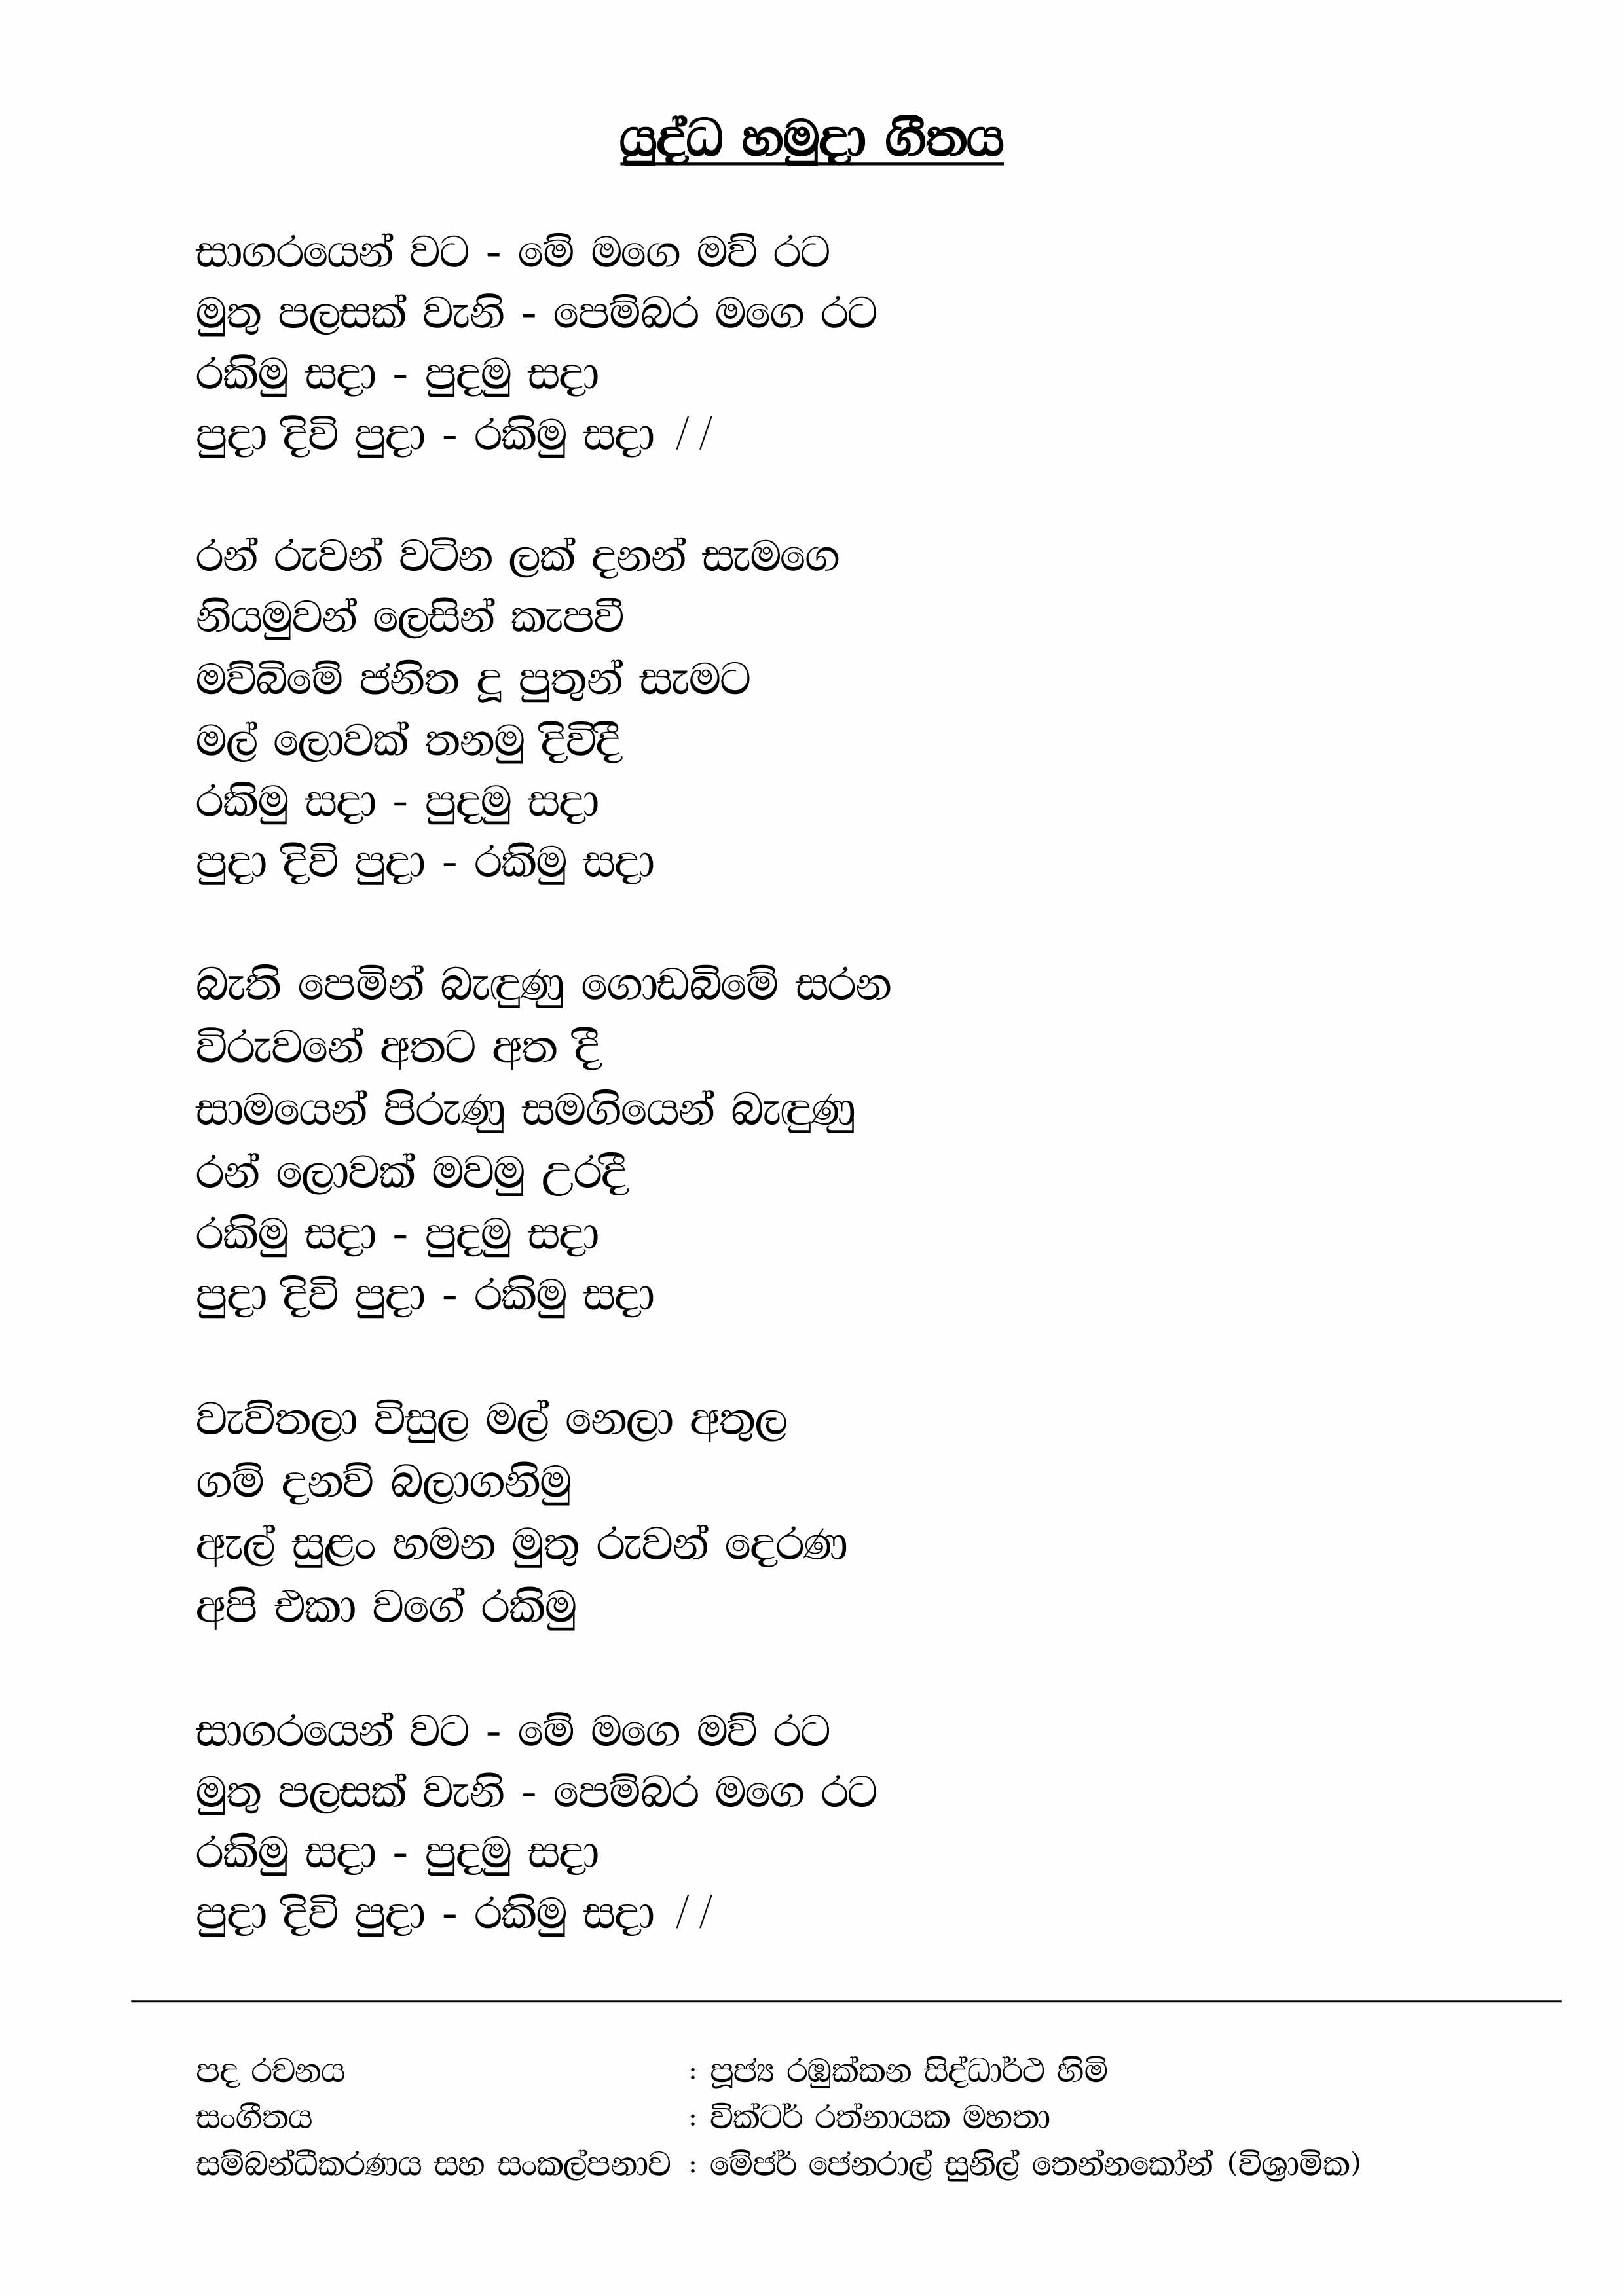 Sri lanka national anthem tamil mp3 song free download